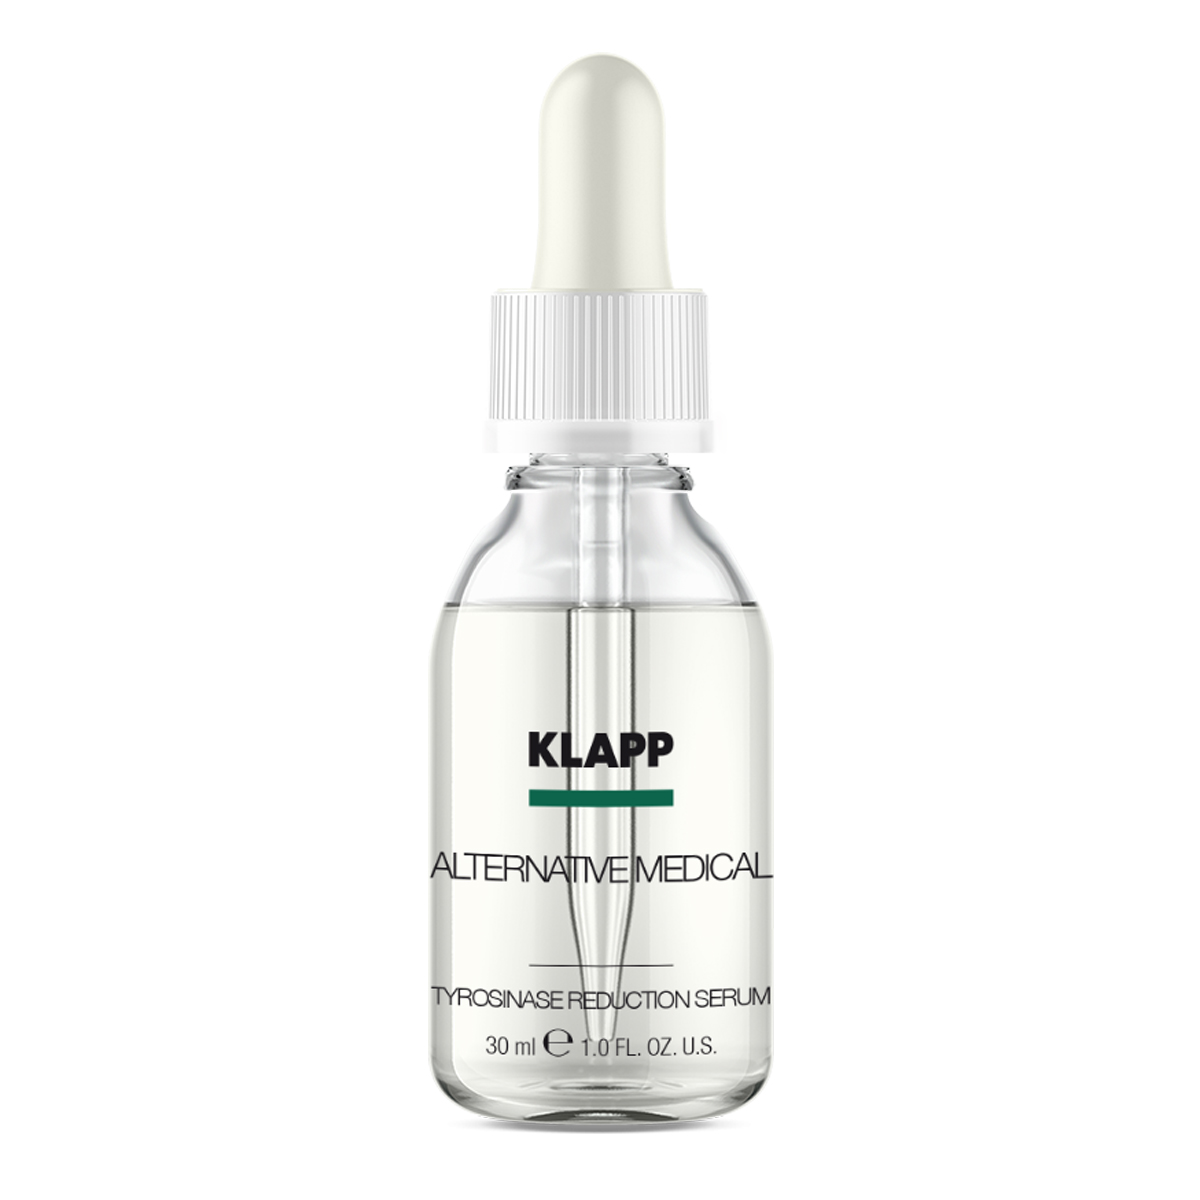 KLAPP Alternative Medical Tyrosinase Reduction Serum 30 ml